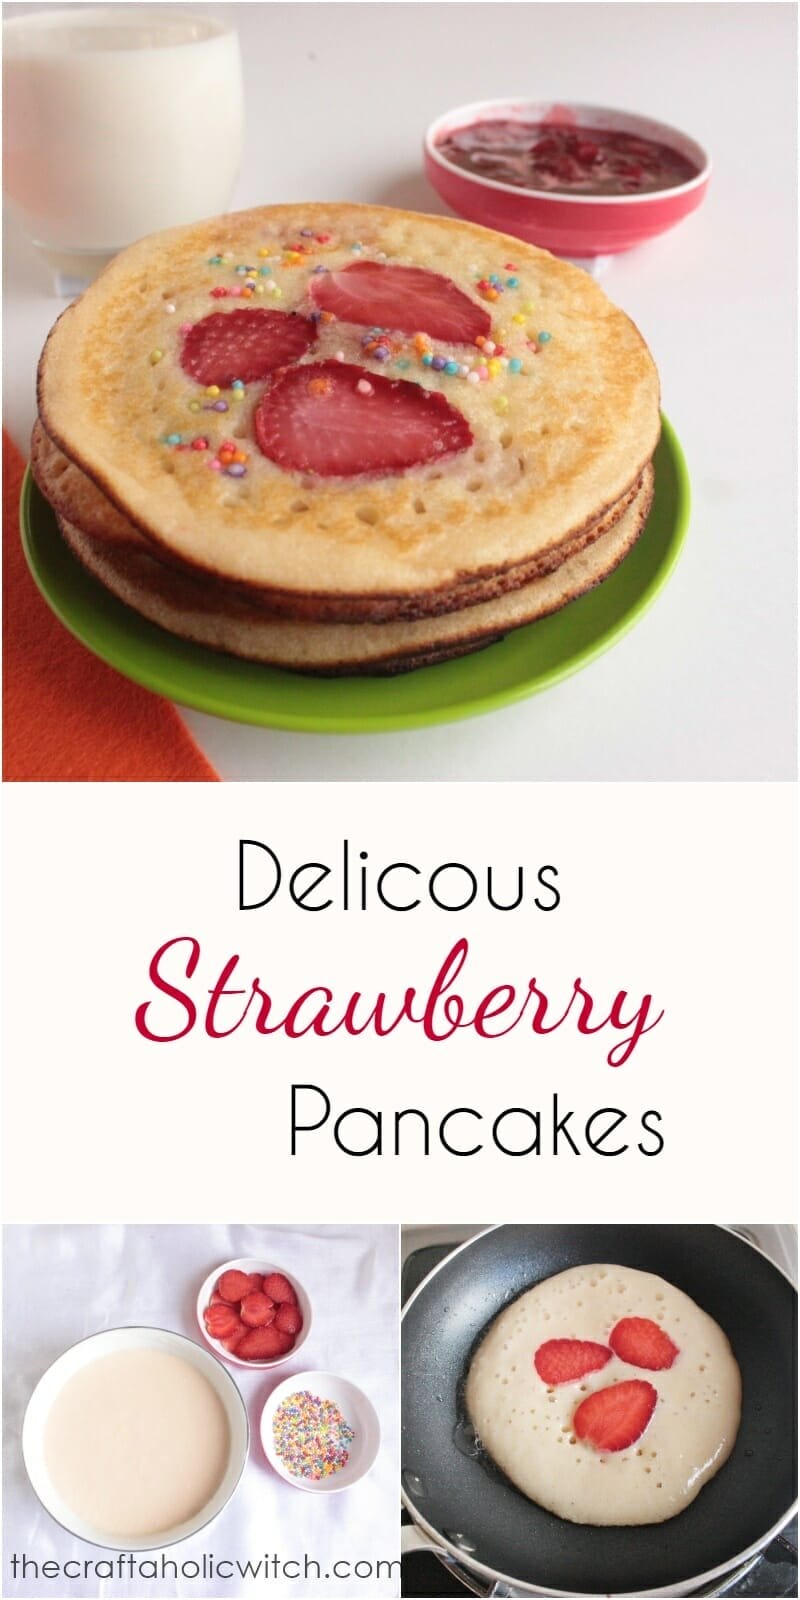 strawberry pancakes pin image - Prepare Delicious Strawberry Pancakes